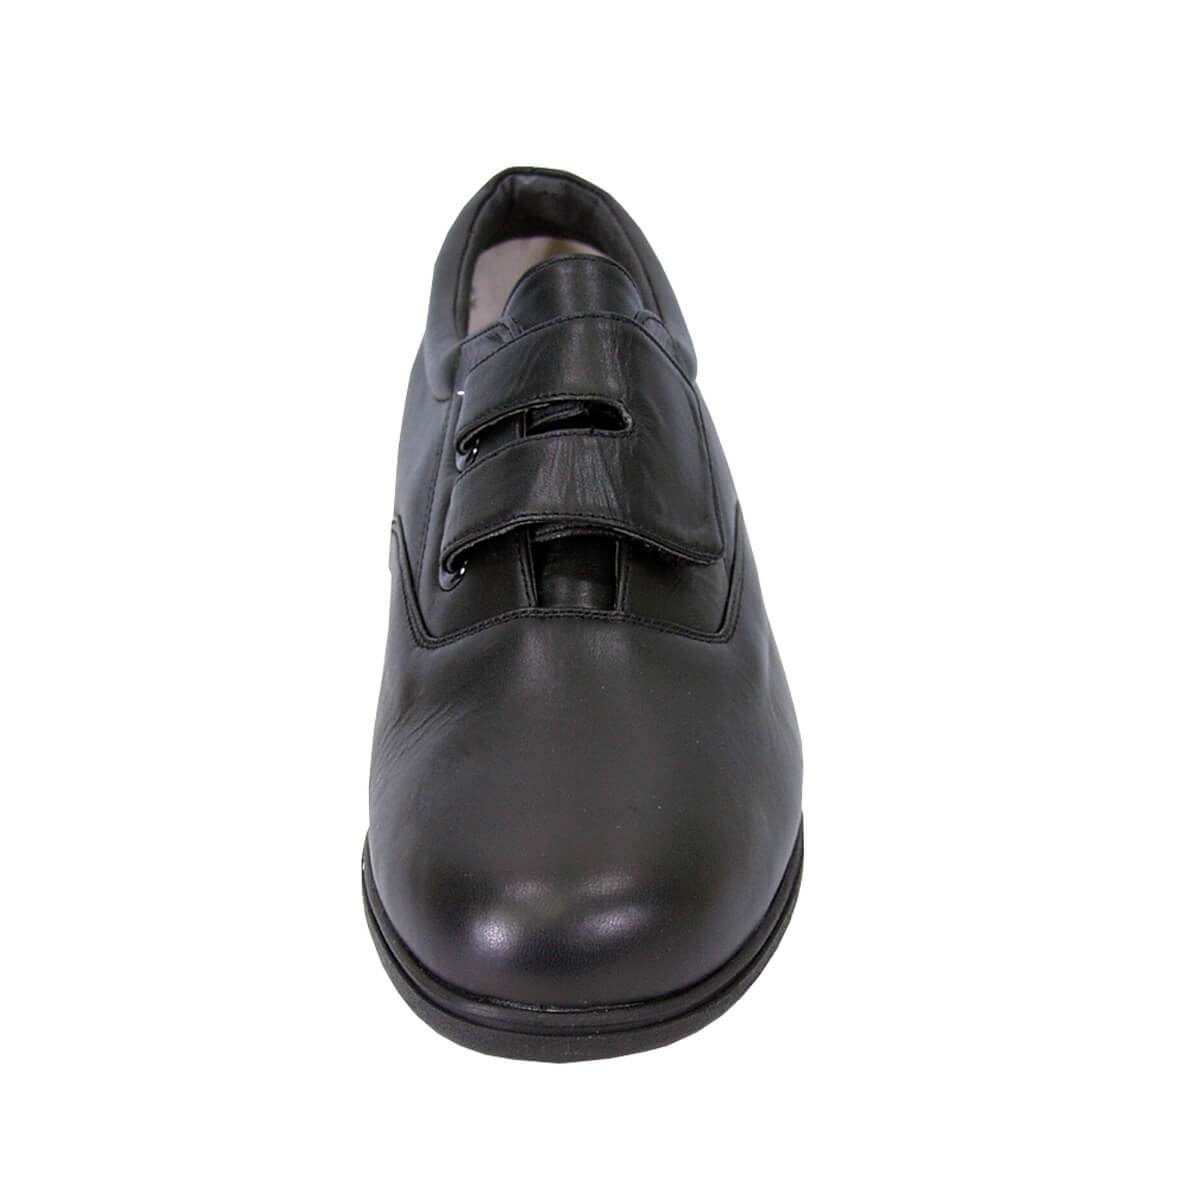 24 HOUR COMFORT Roberta Women's Wide Width Leather Slip-On Shoes